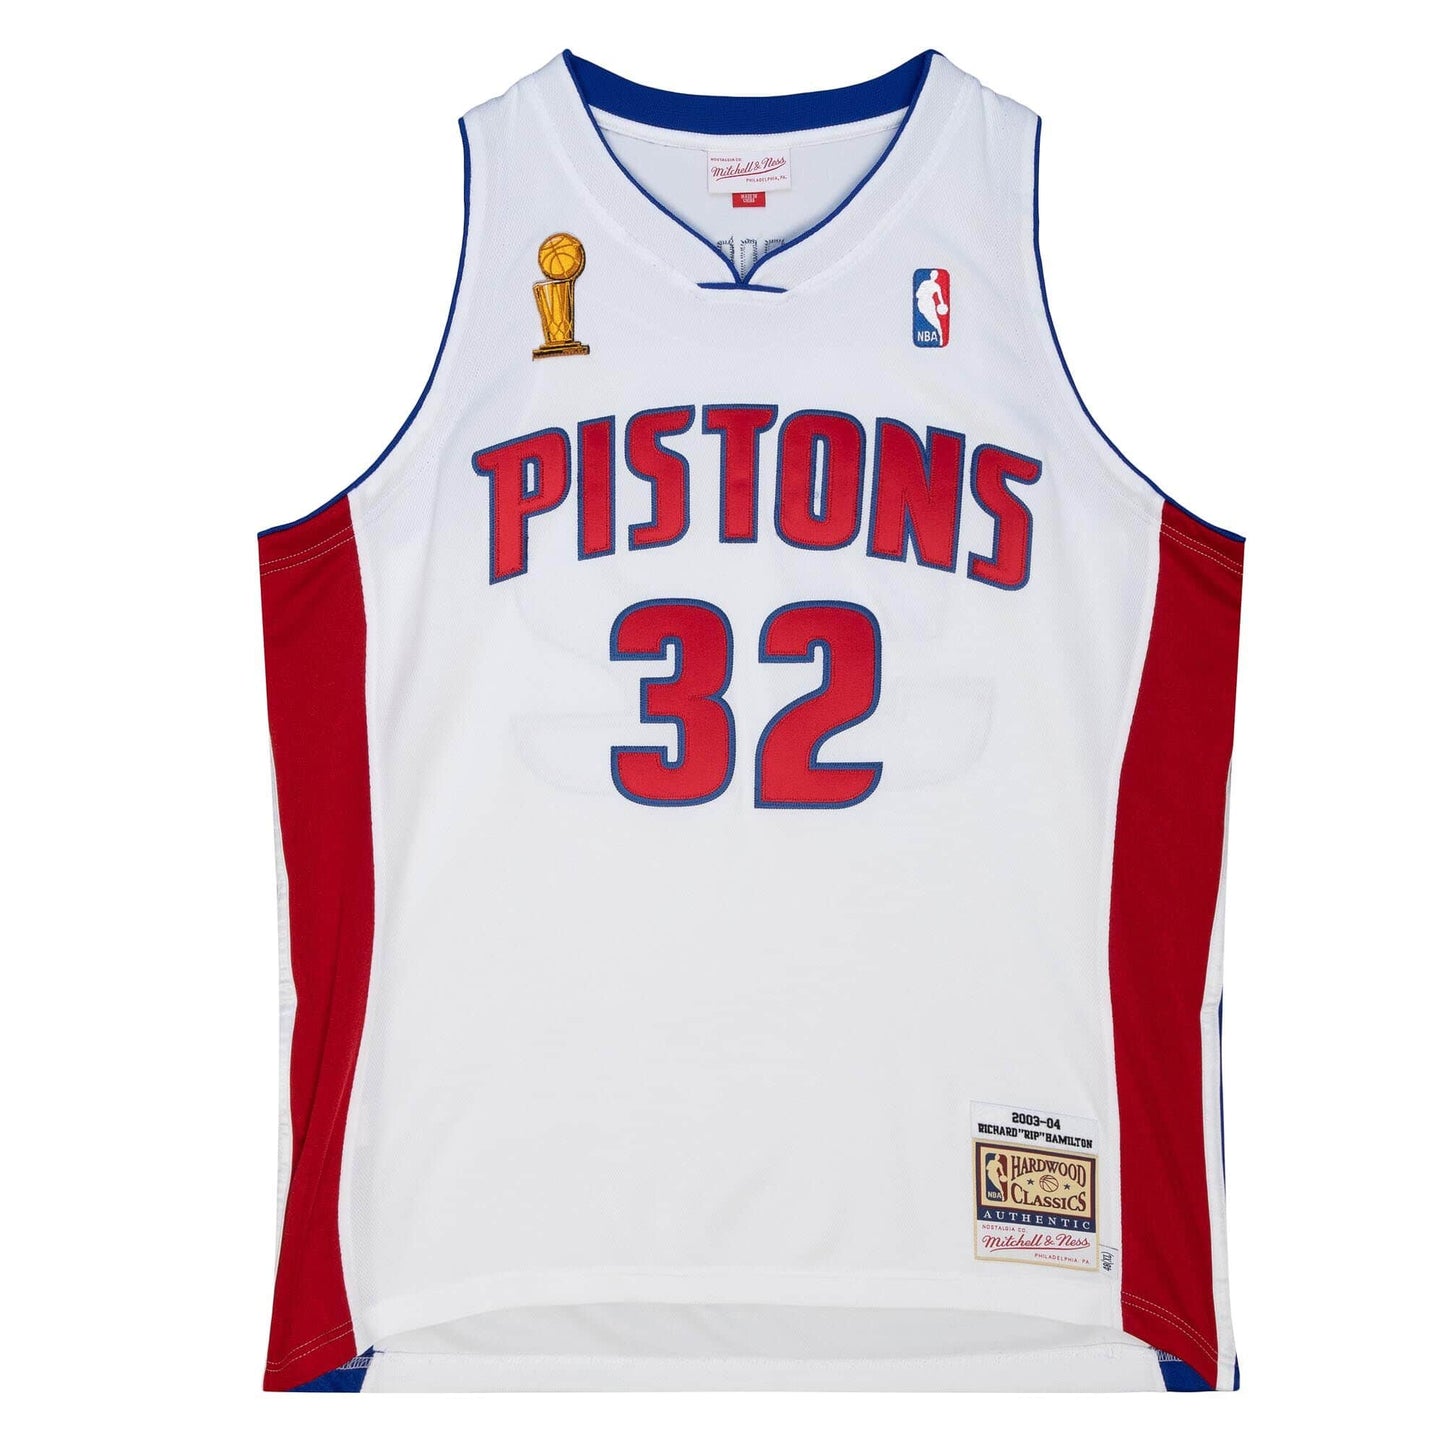 Authentic Richard Hamilton Detroit Pistons 2003-04 Jersey